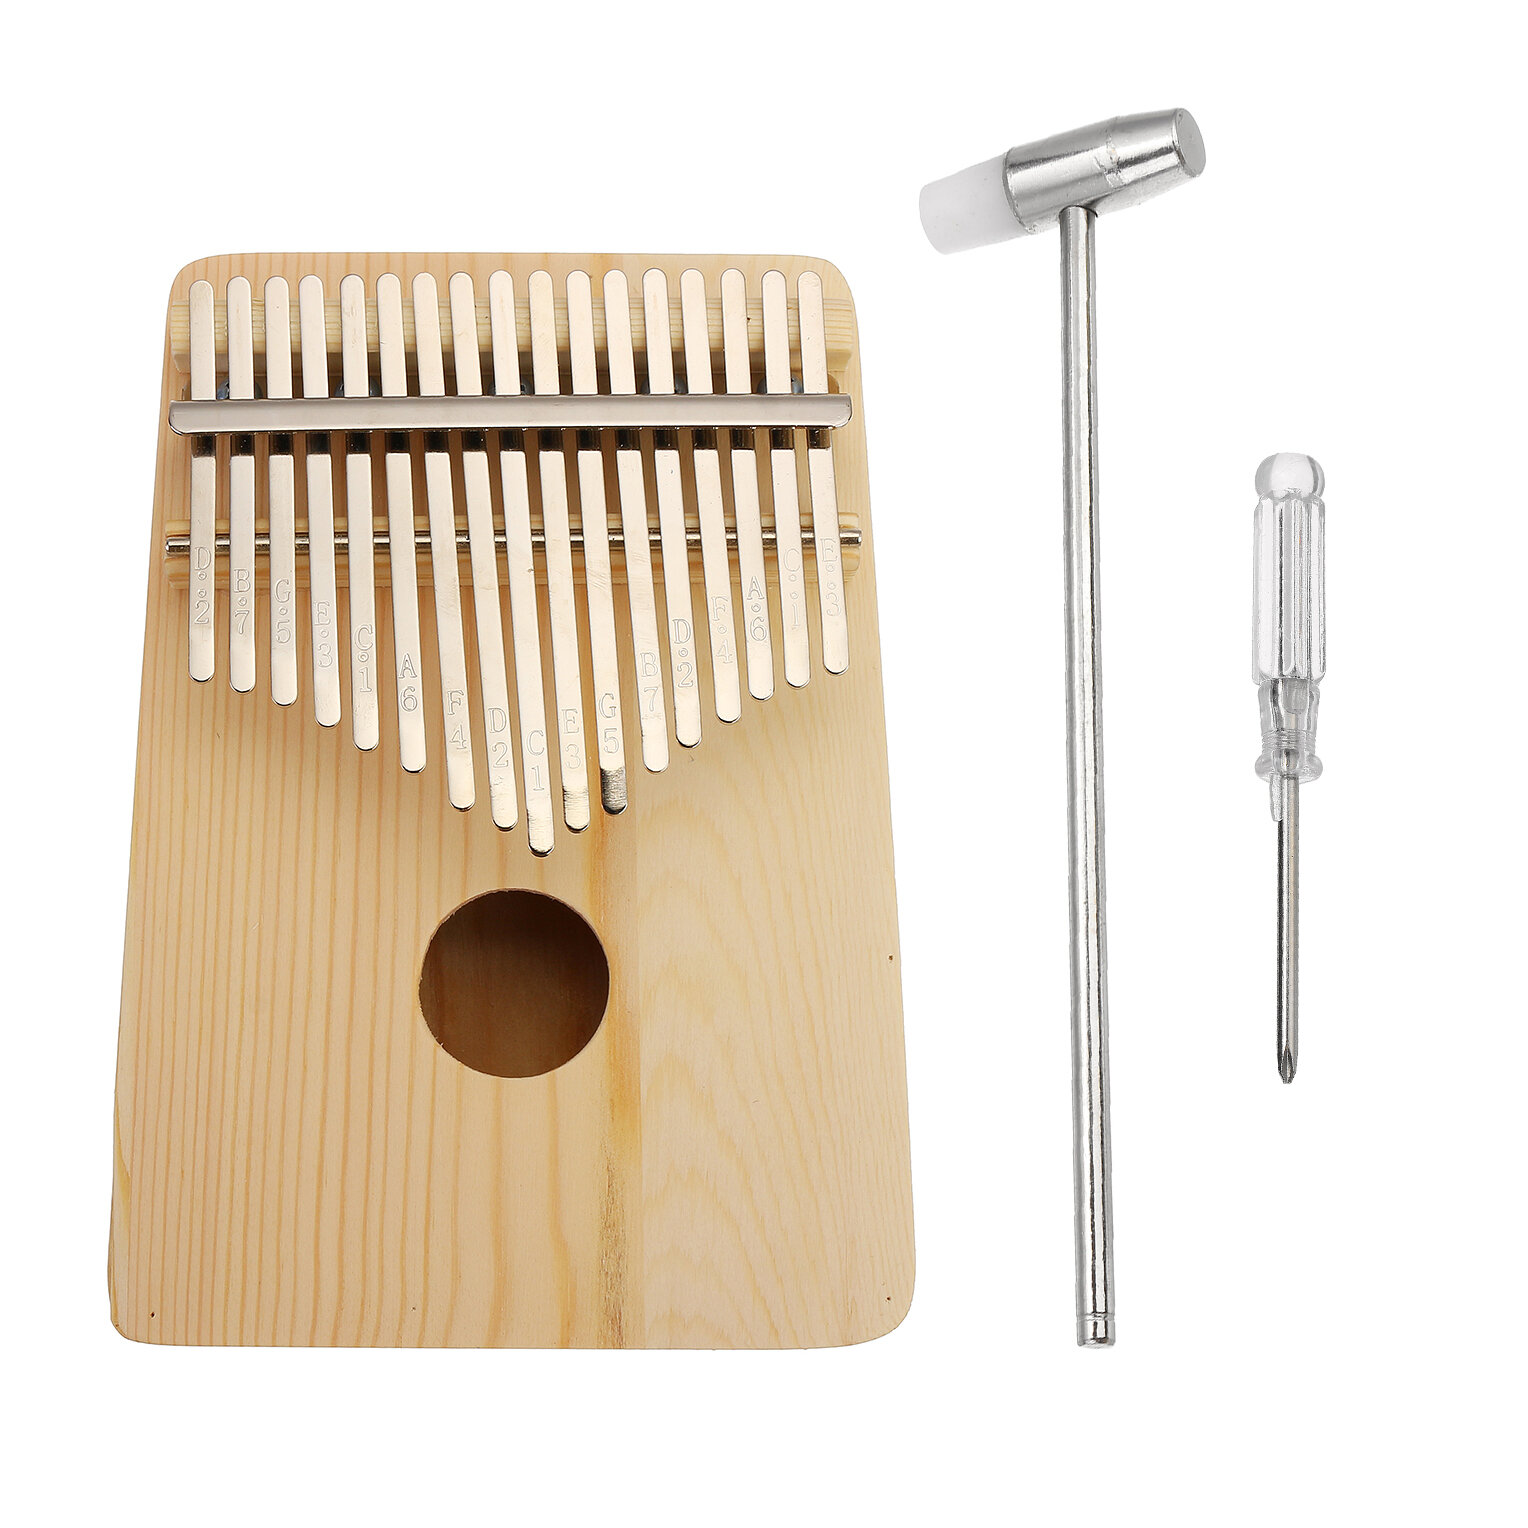 

17 Key Kalimba Wood Thumb Piano Finger Keyboard Instrumentw/Tuning Hammer Gift